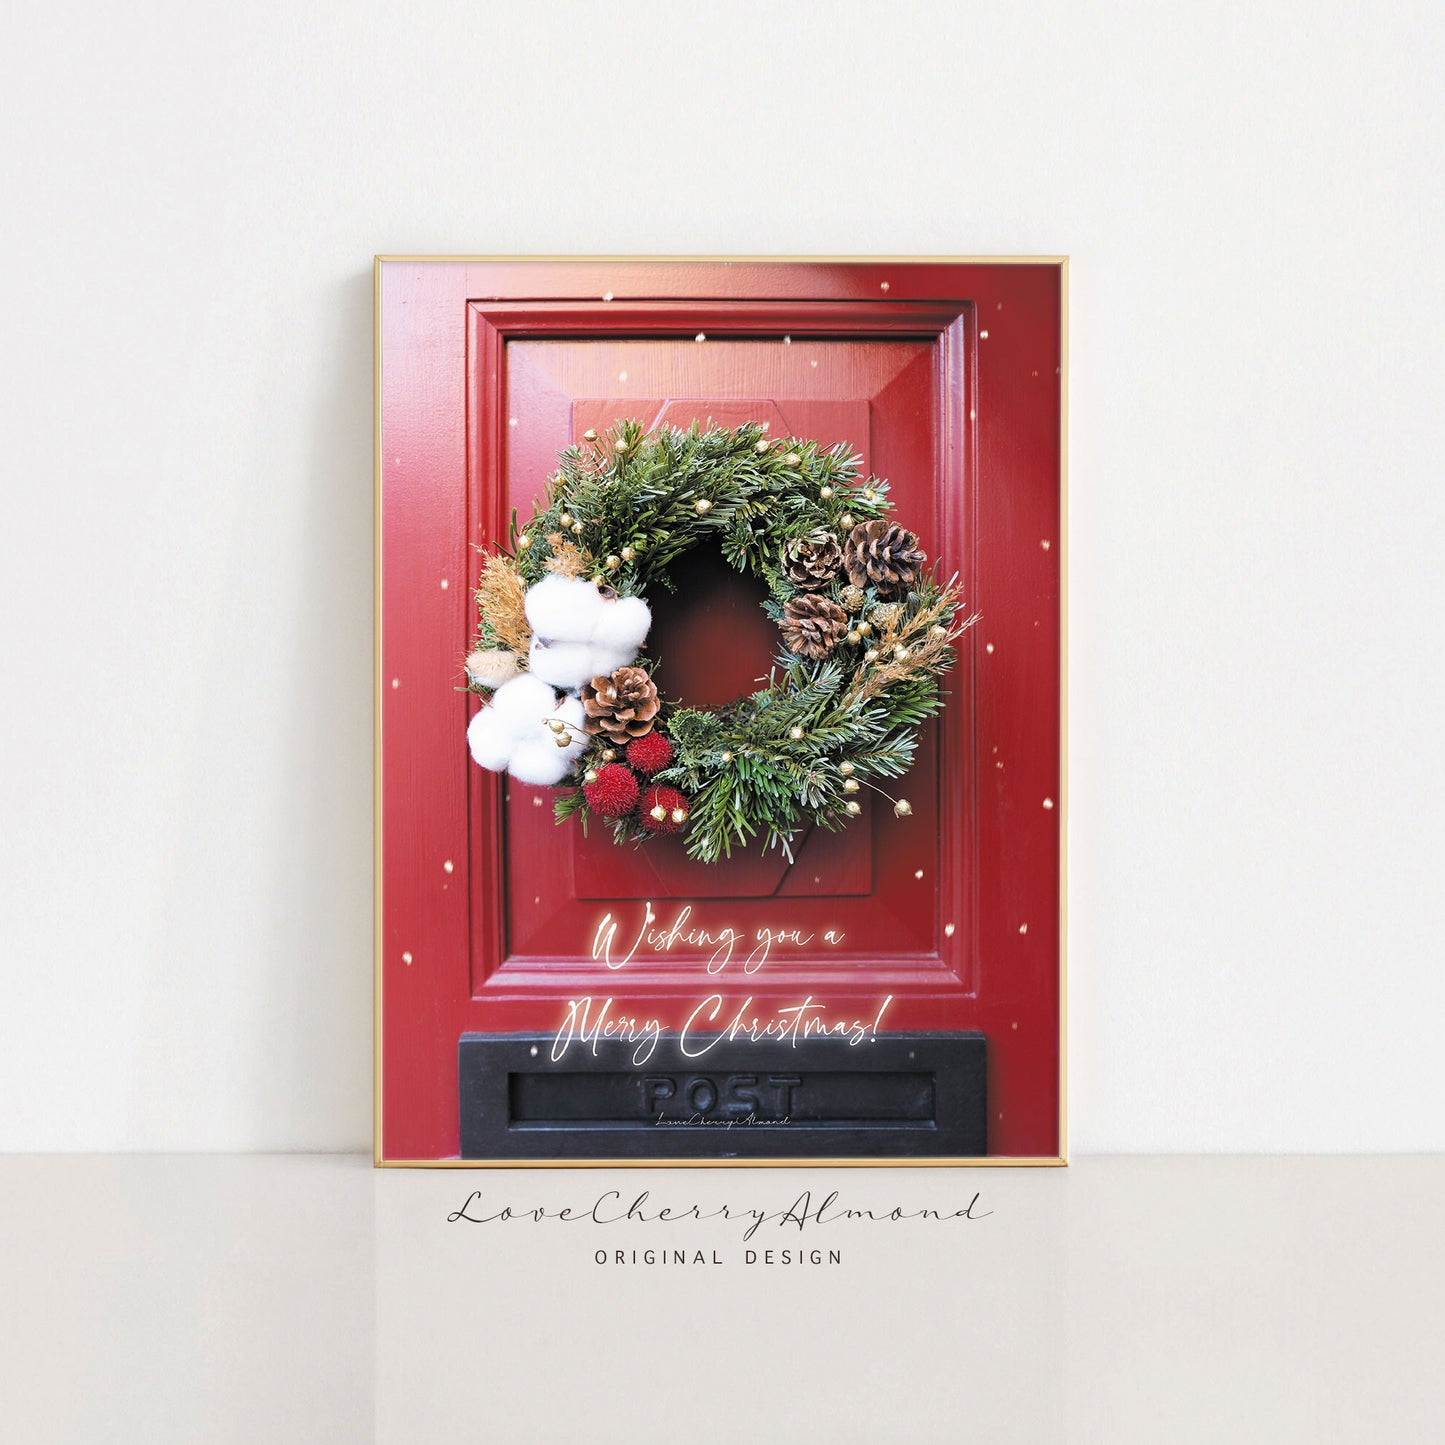 Christmas Collection "Wreath"